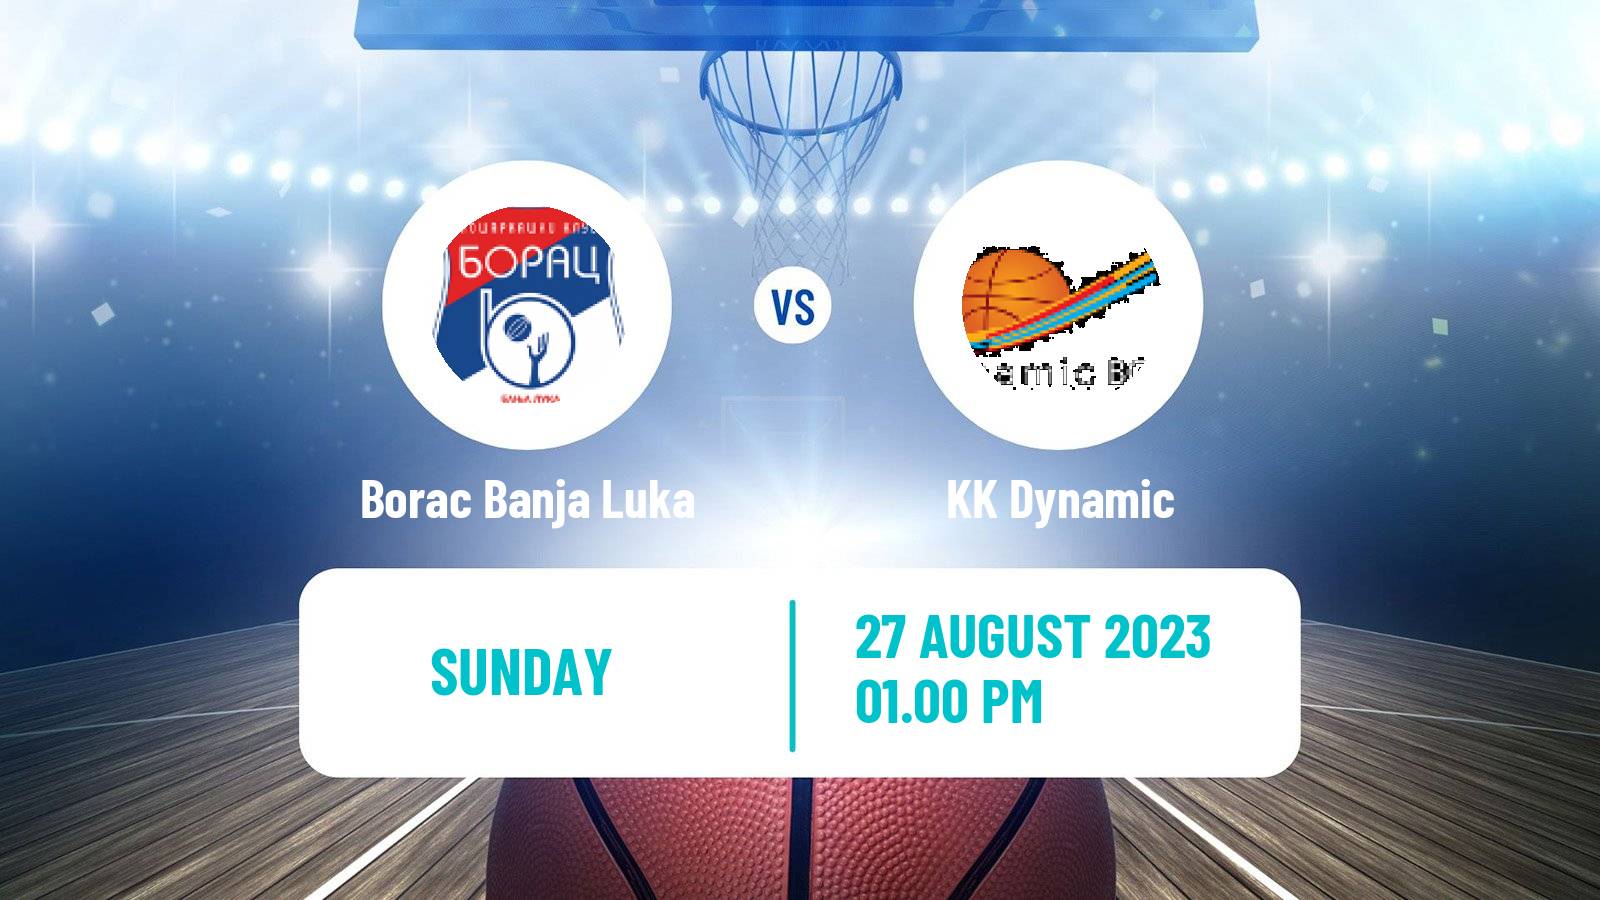 Basketball Club Friendly Basketball Borac Banja Luka - Dynamic